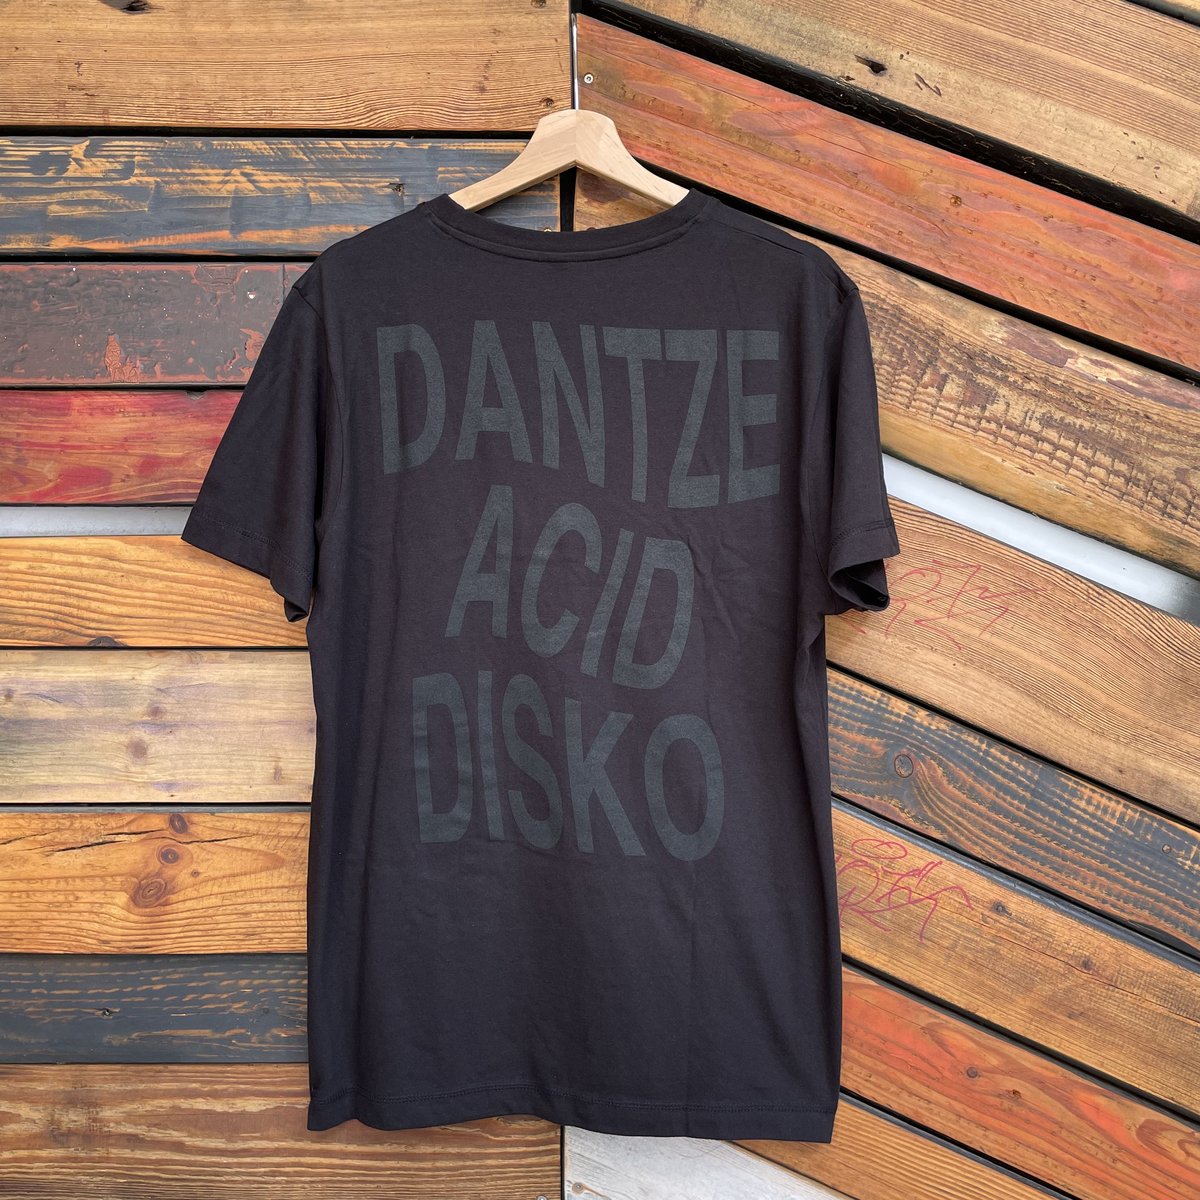 "Dantze Acid Disko" Shirt black - by Dantze